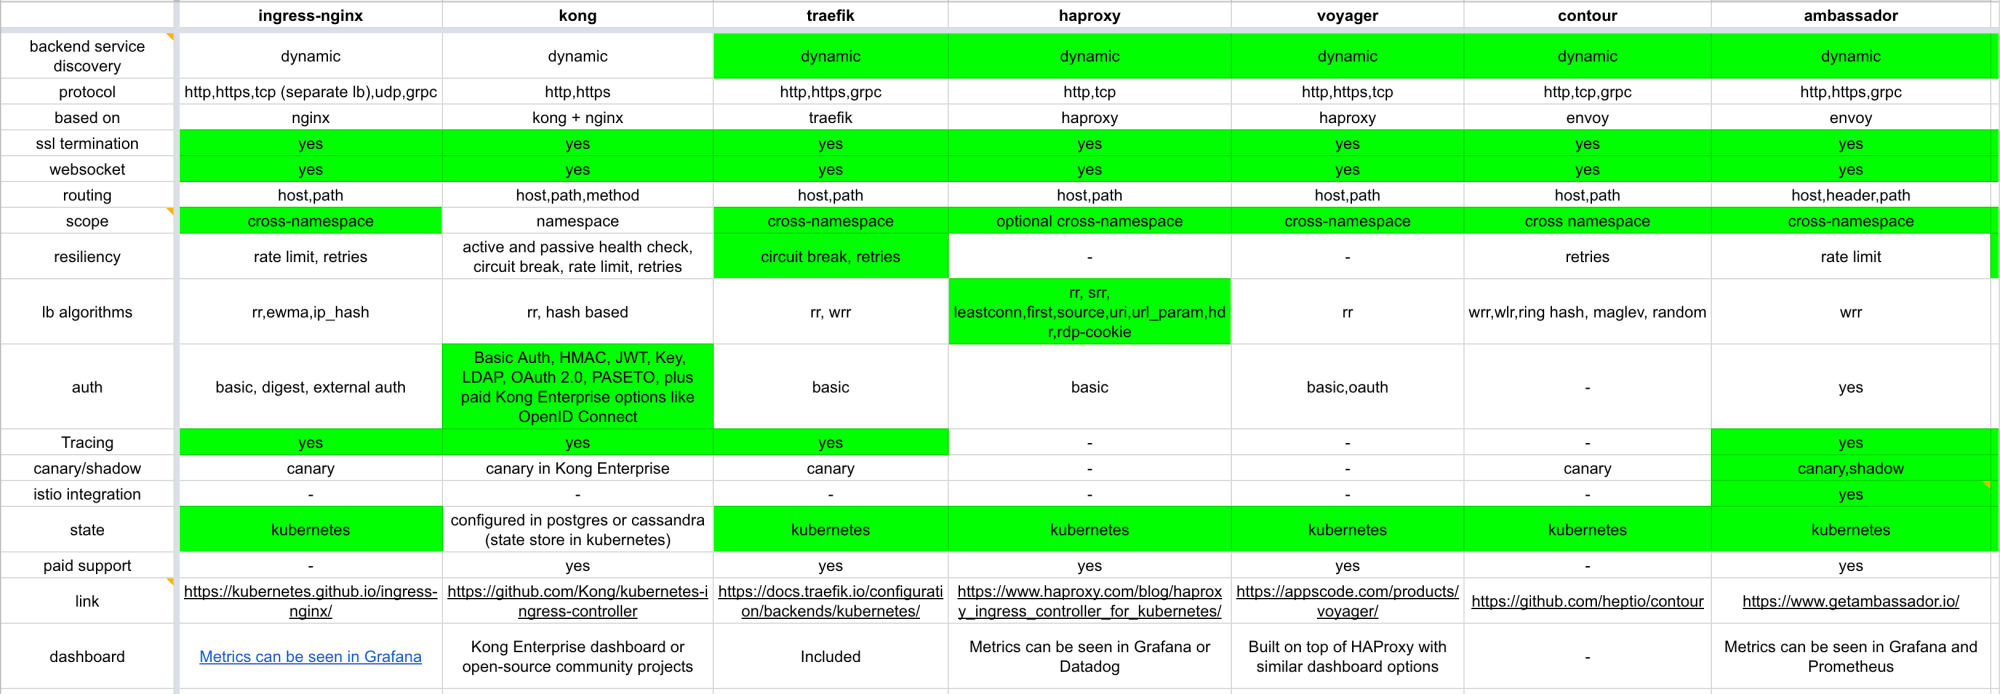 Nginx-ingress vs kong vs traefik vs haproxy vs voyager vs contour vs ambassador vs istio ingress